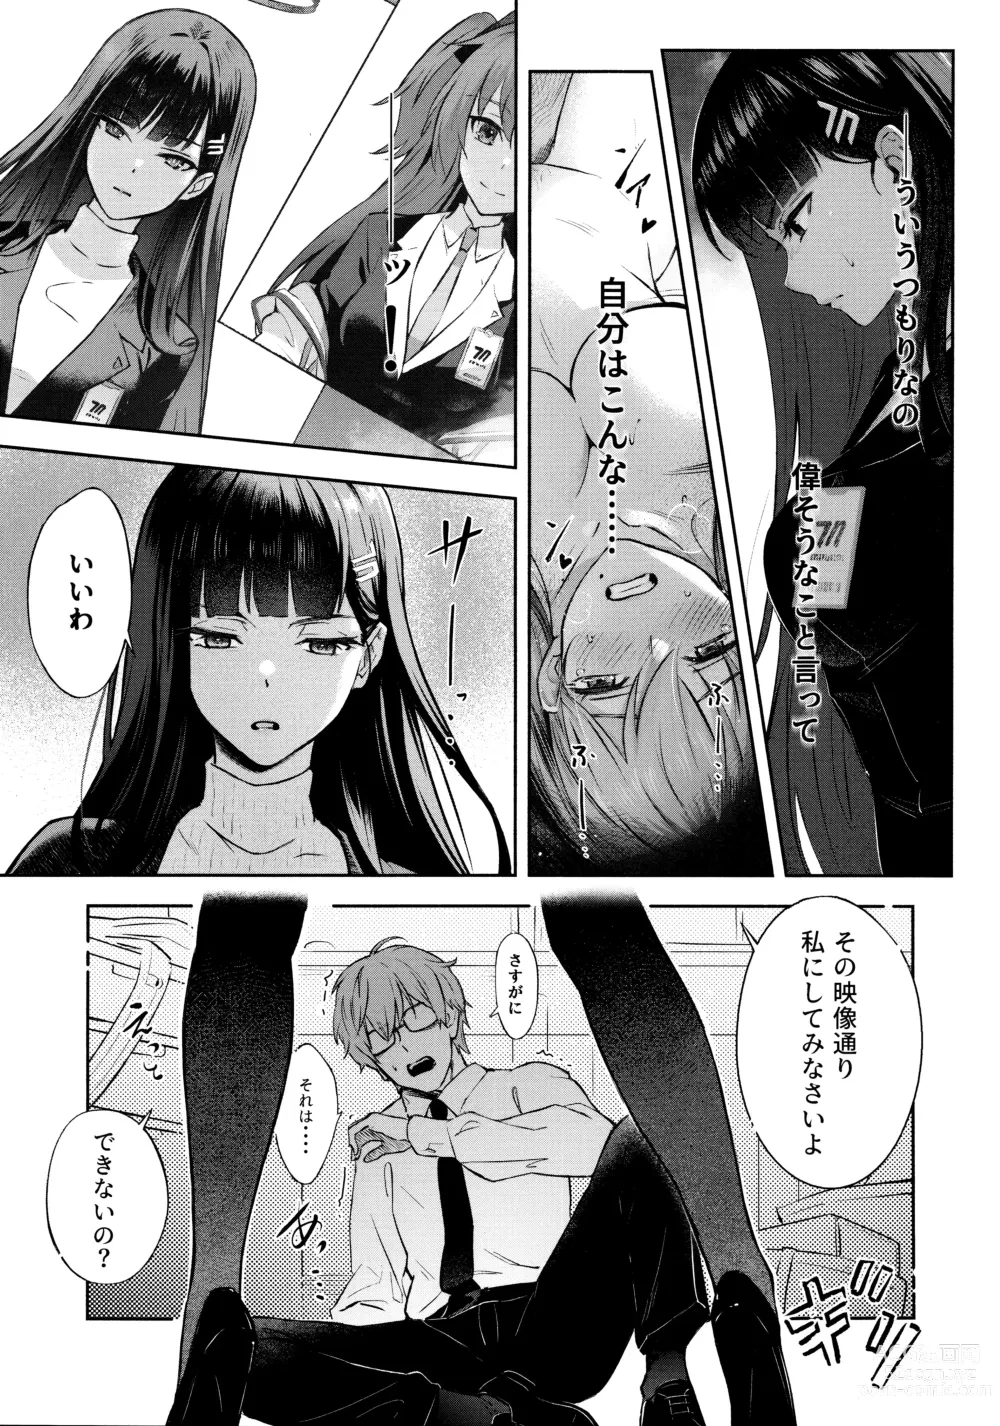 Page 8 of doujinshi Kaichou-chan no Koi - Student Government Presidents love